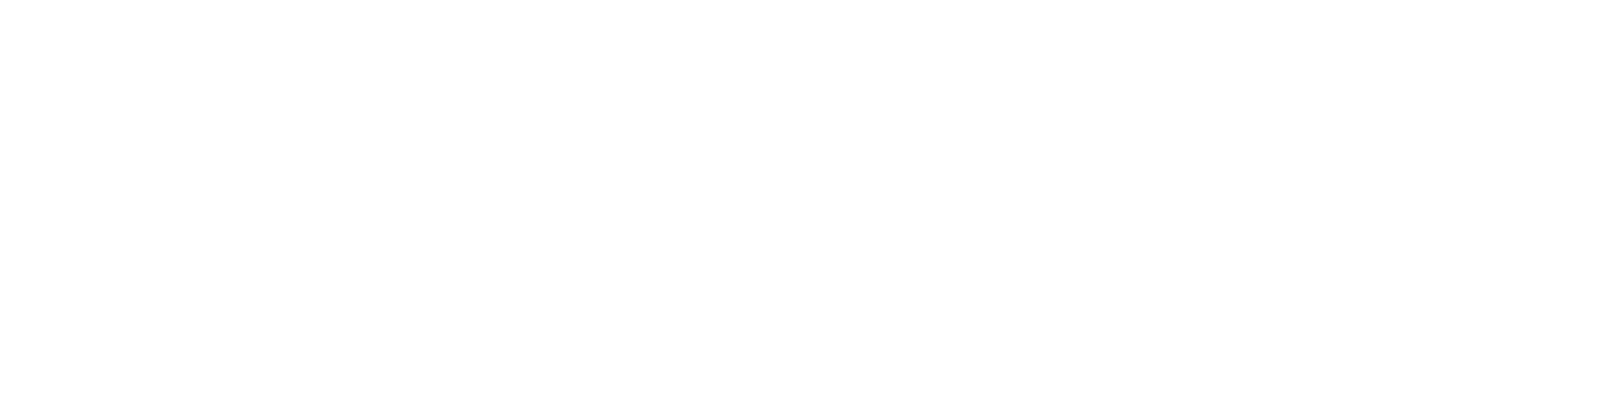 Upper Apk Logo